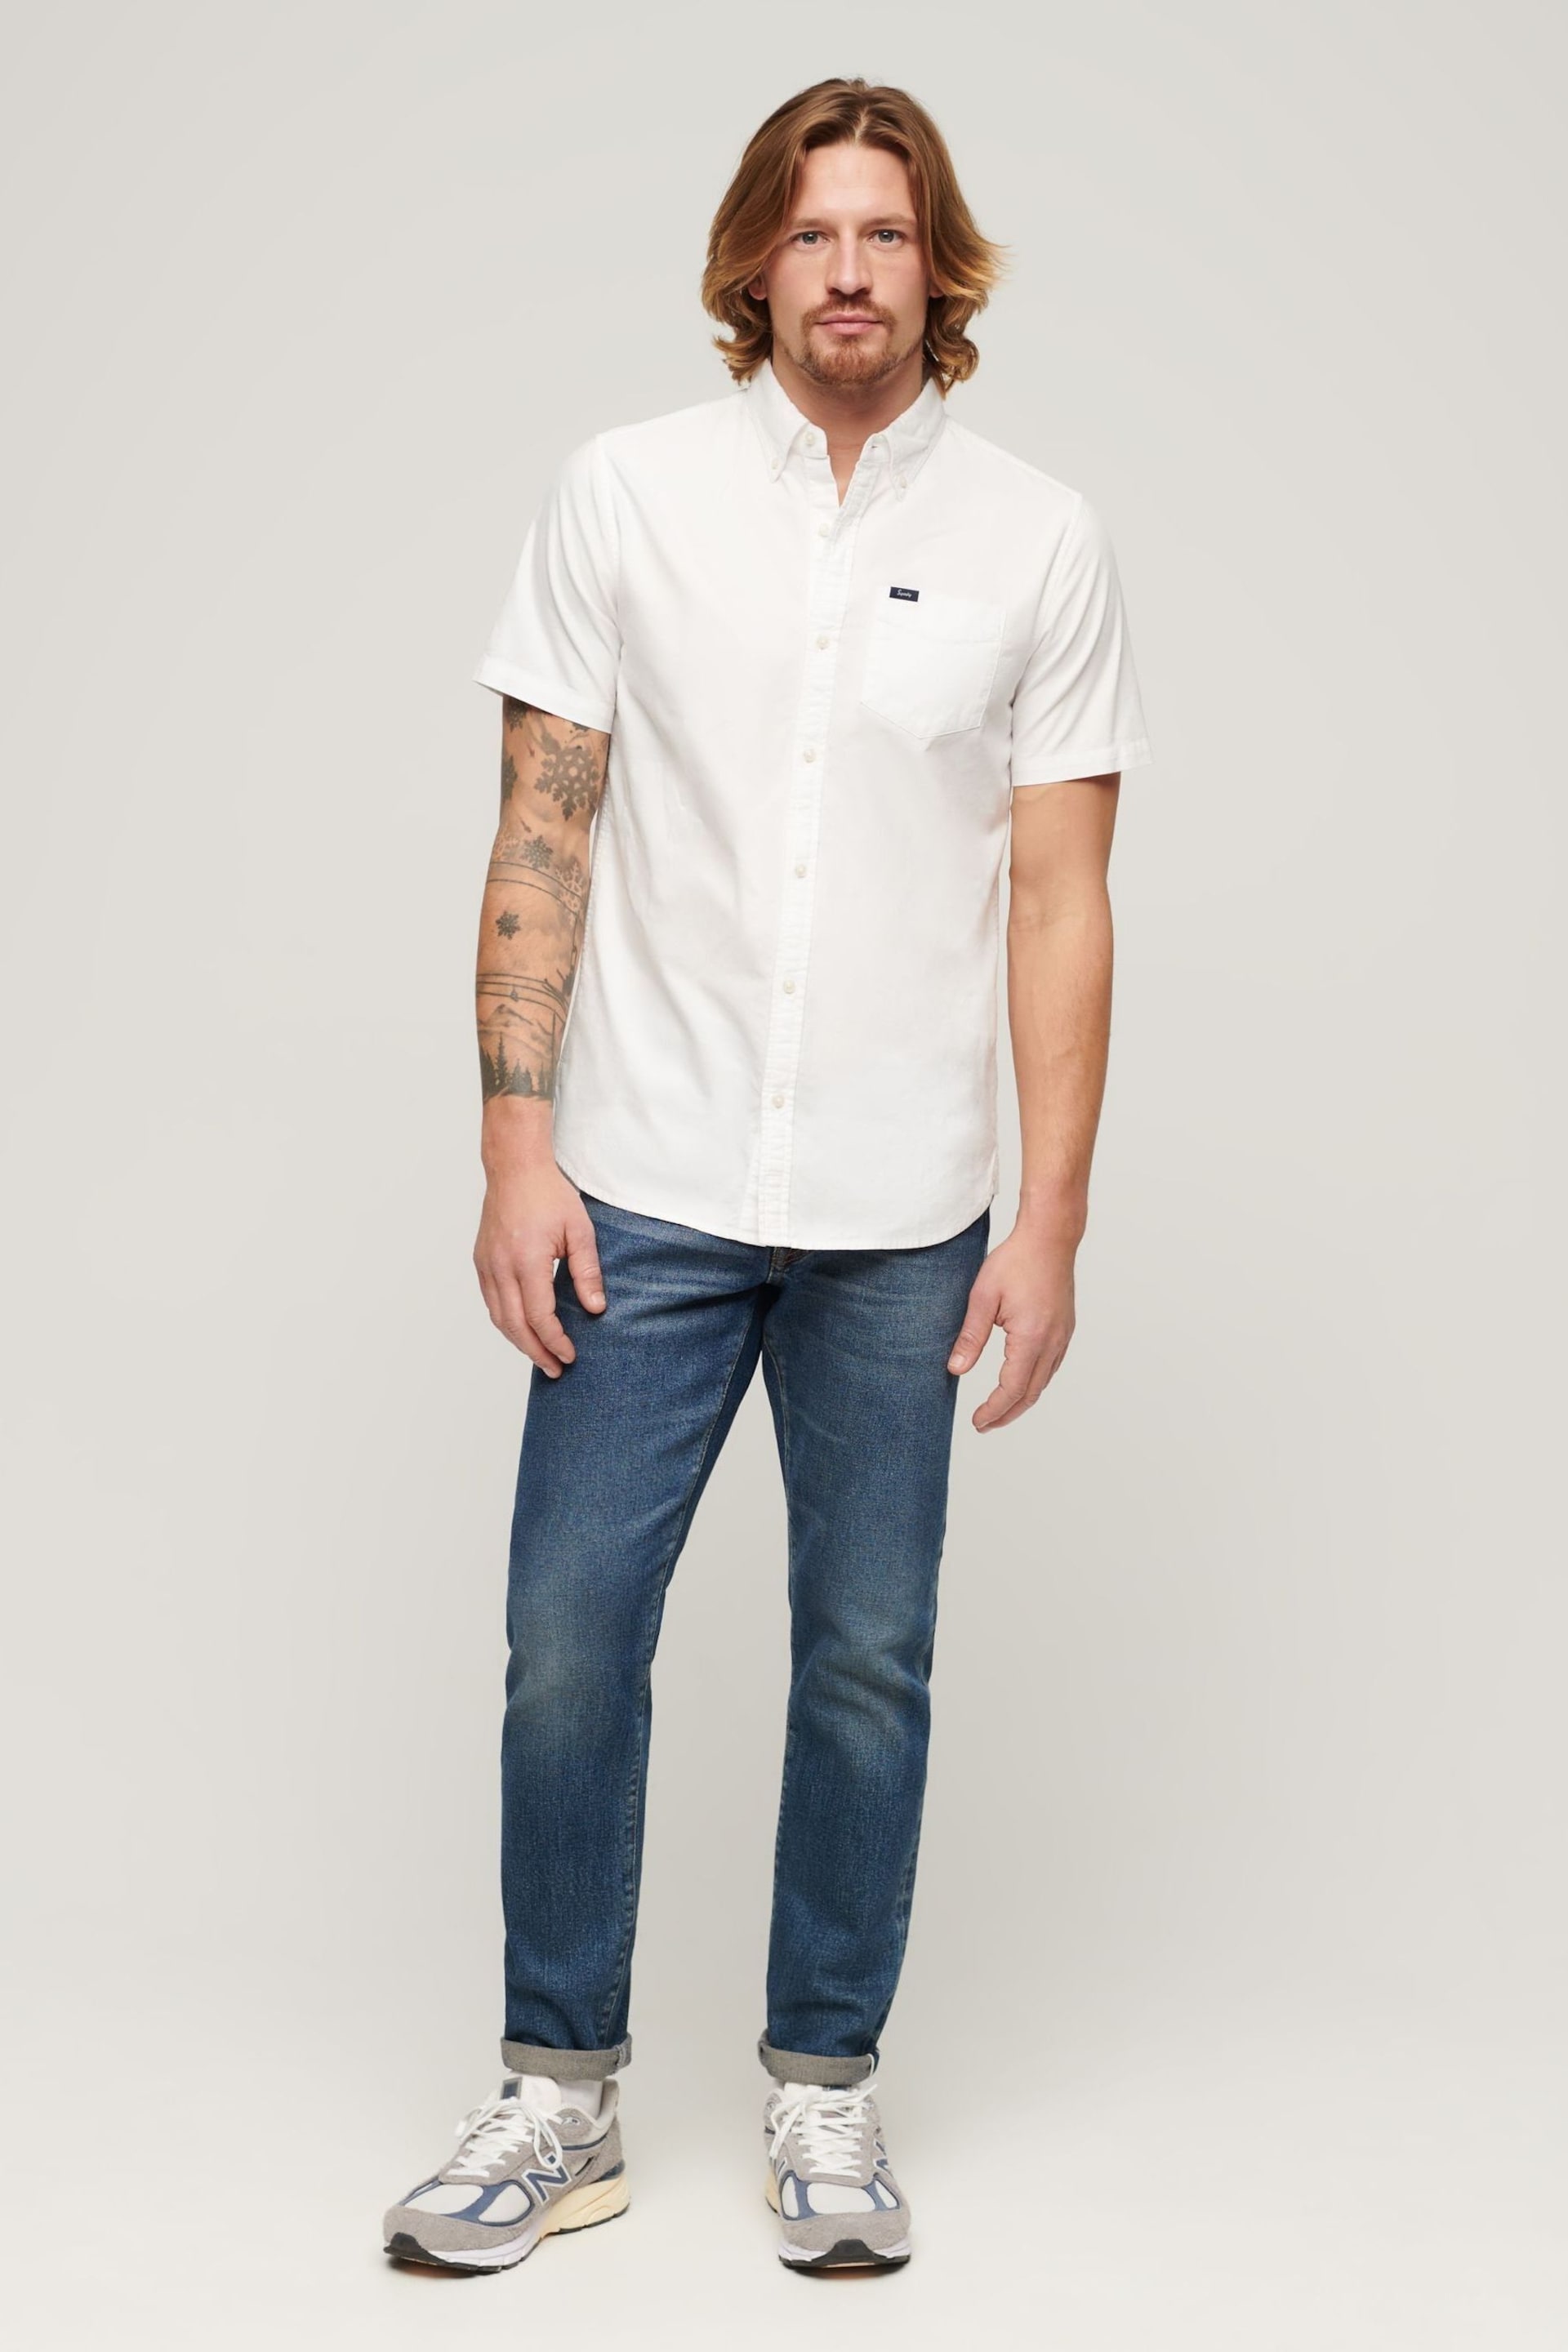 Superdry White Vintage Oxford Short Sleeve Shirt - Image 2 of 5